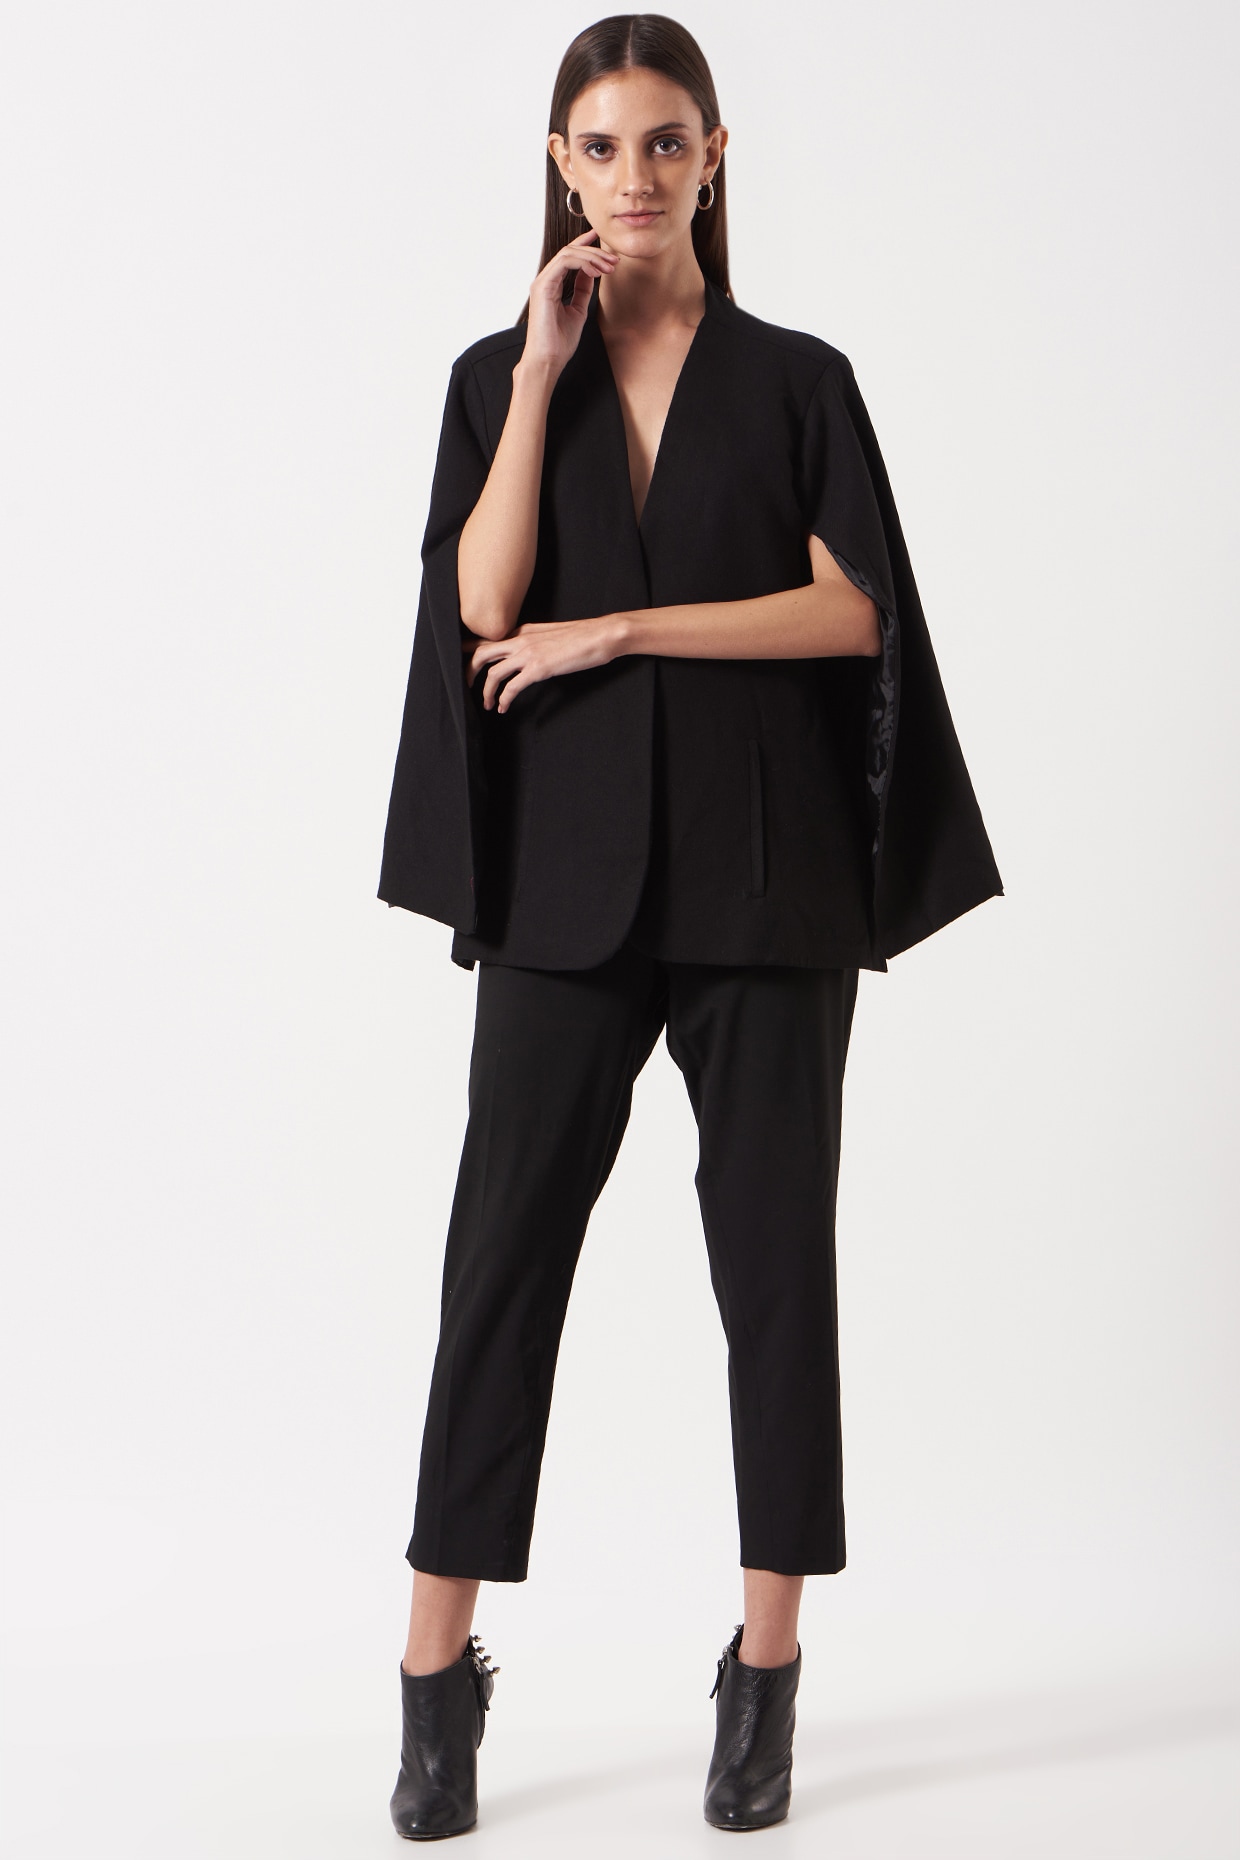 Black Woven Cape Blazer Set Design by The Hem'd at Pernia's Pop Up